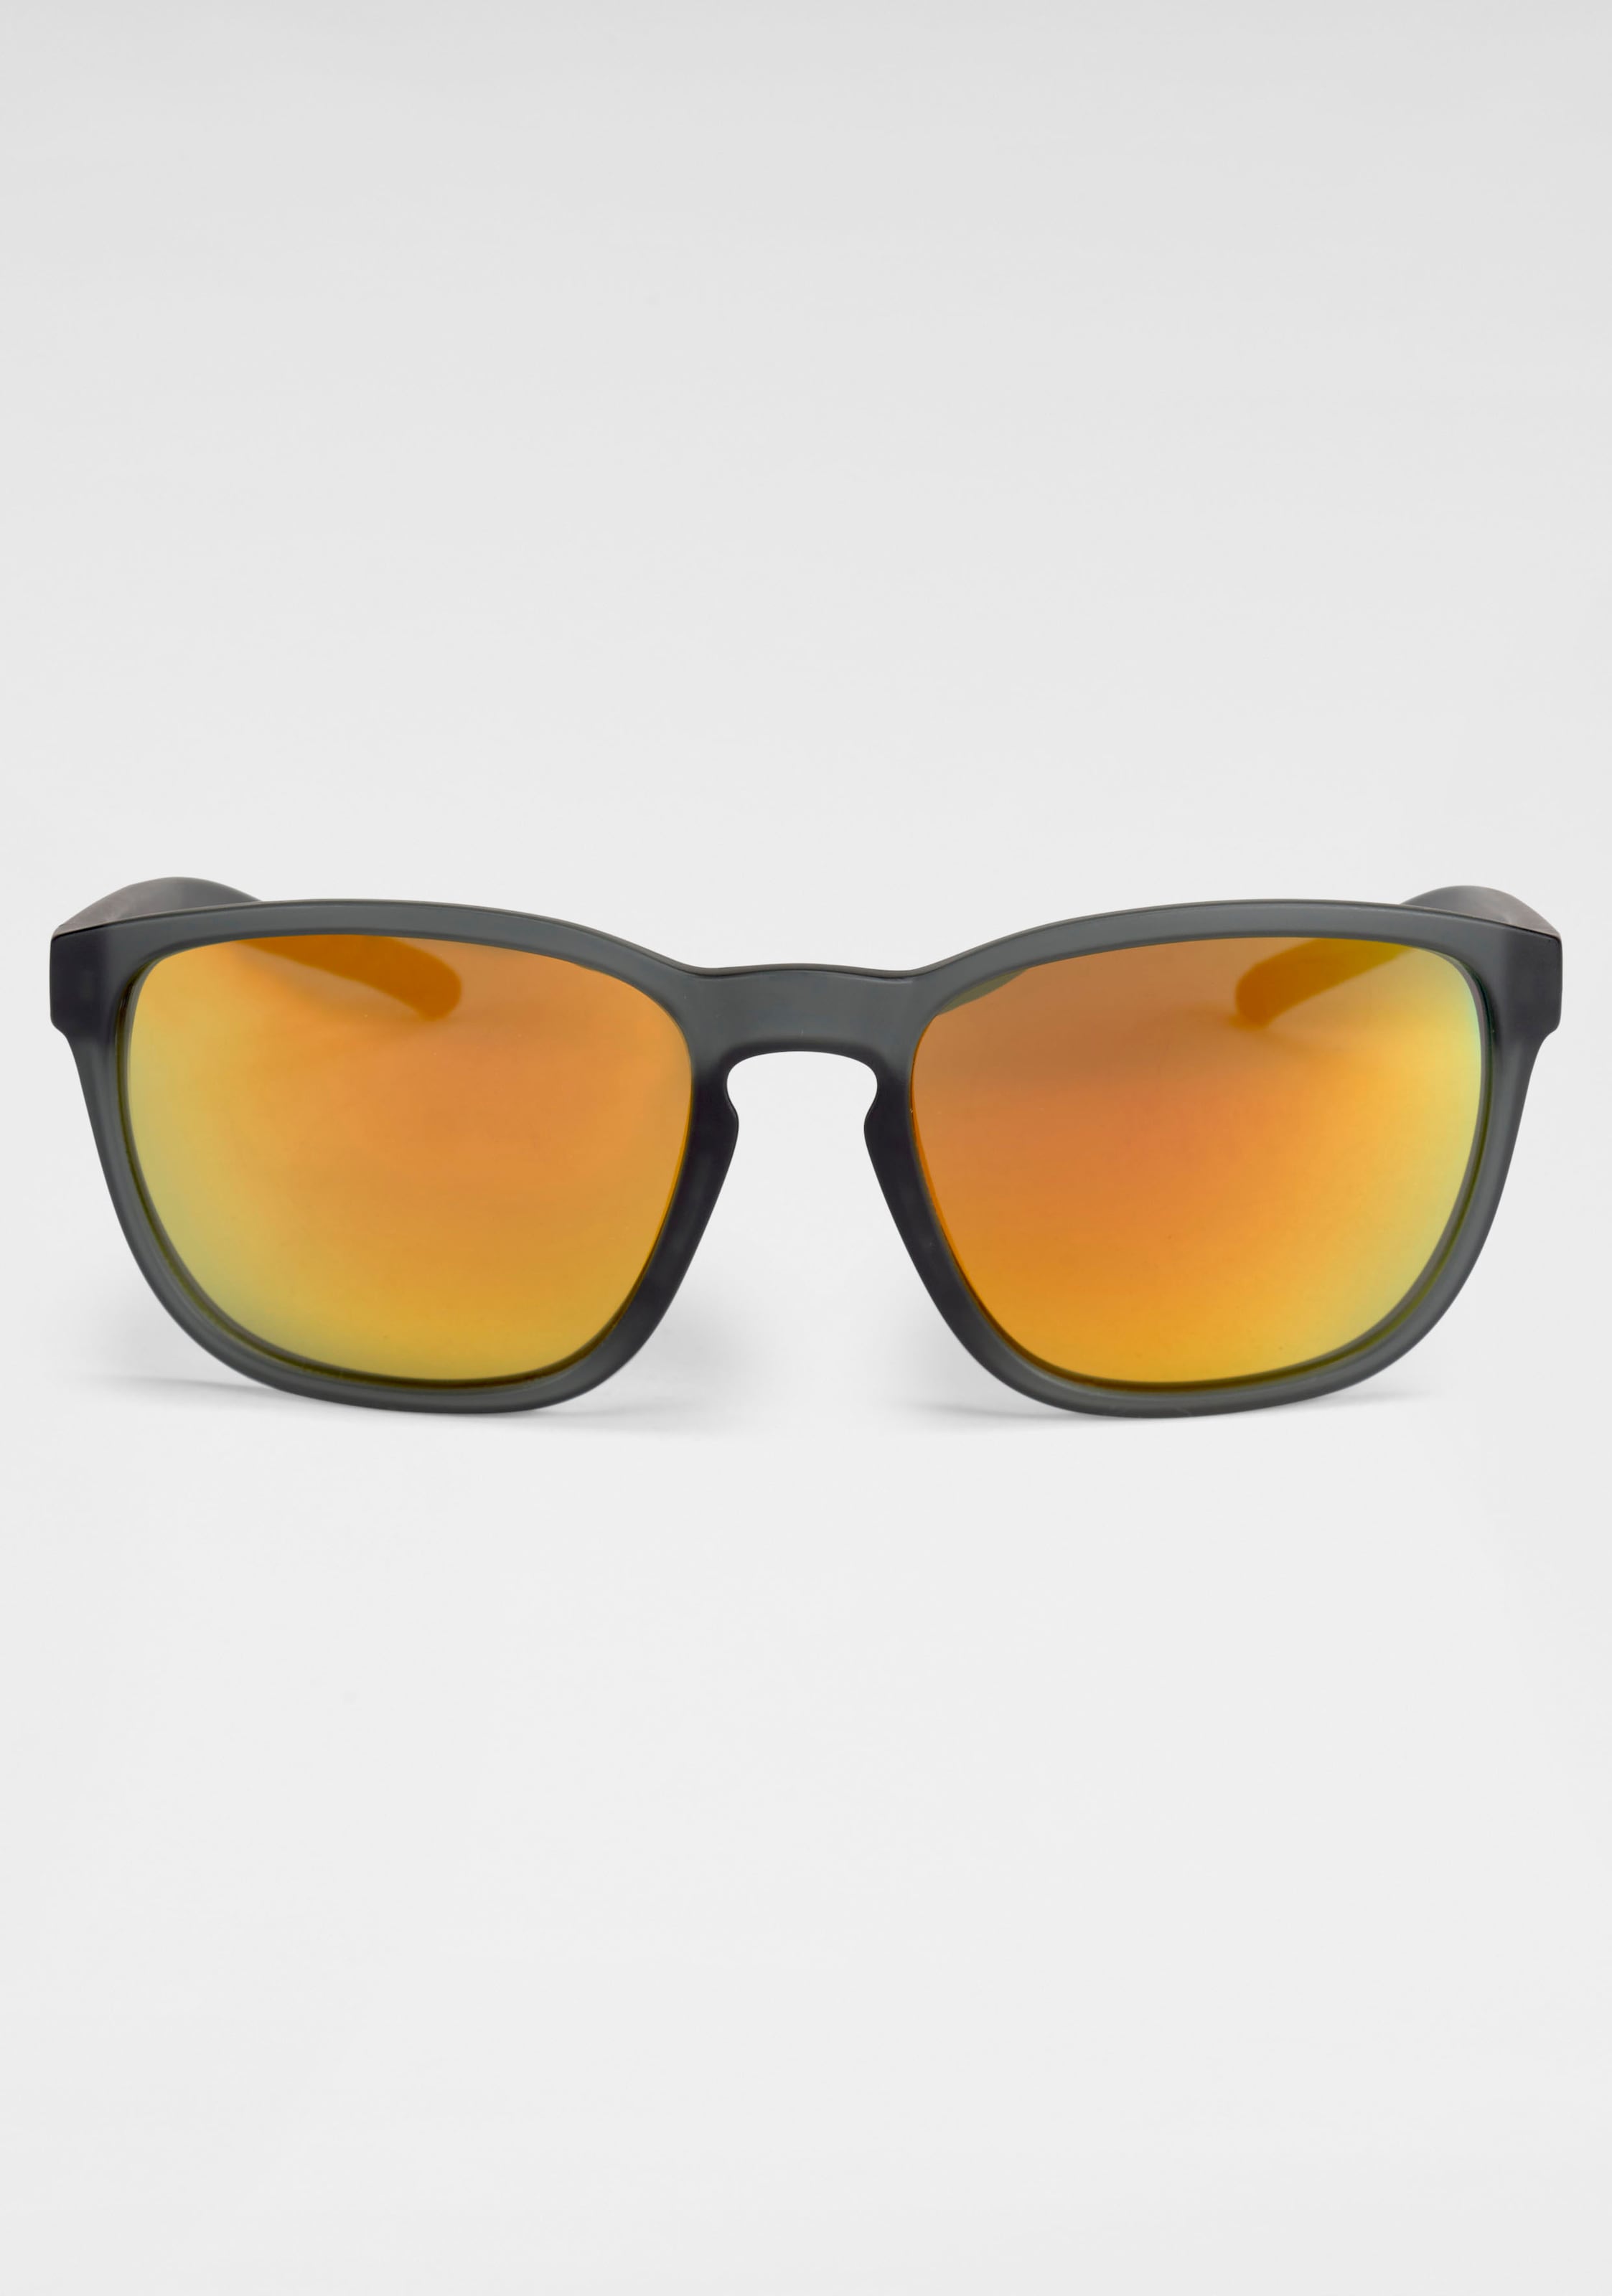 BASEFIELD Sonnenbrille, Vollrand Sonnenbrille Kunststoff cristal-smoke